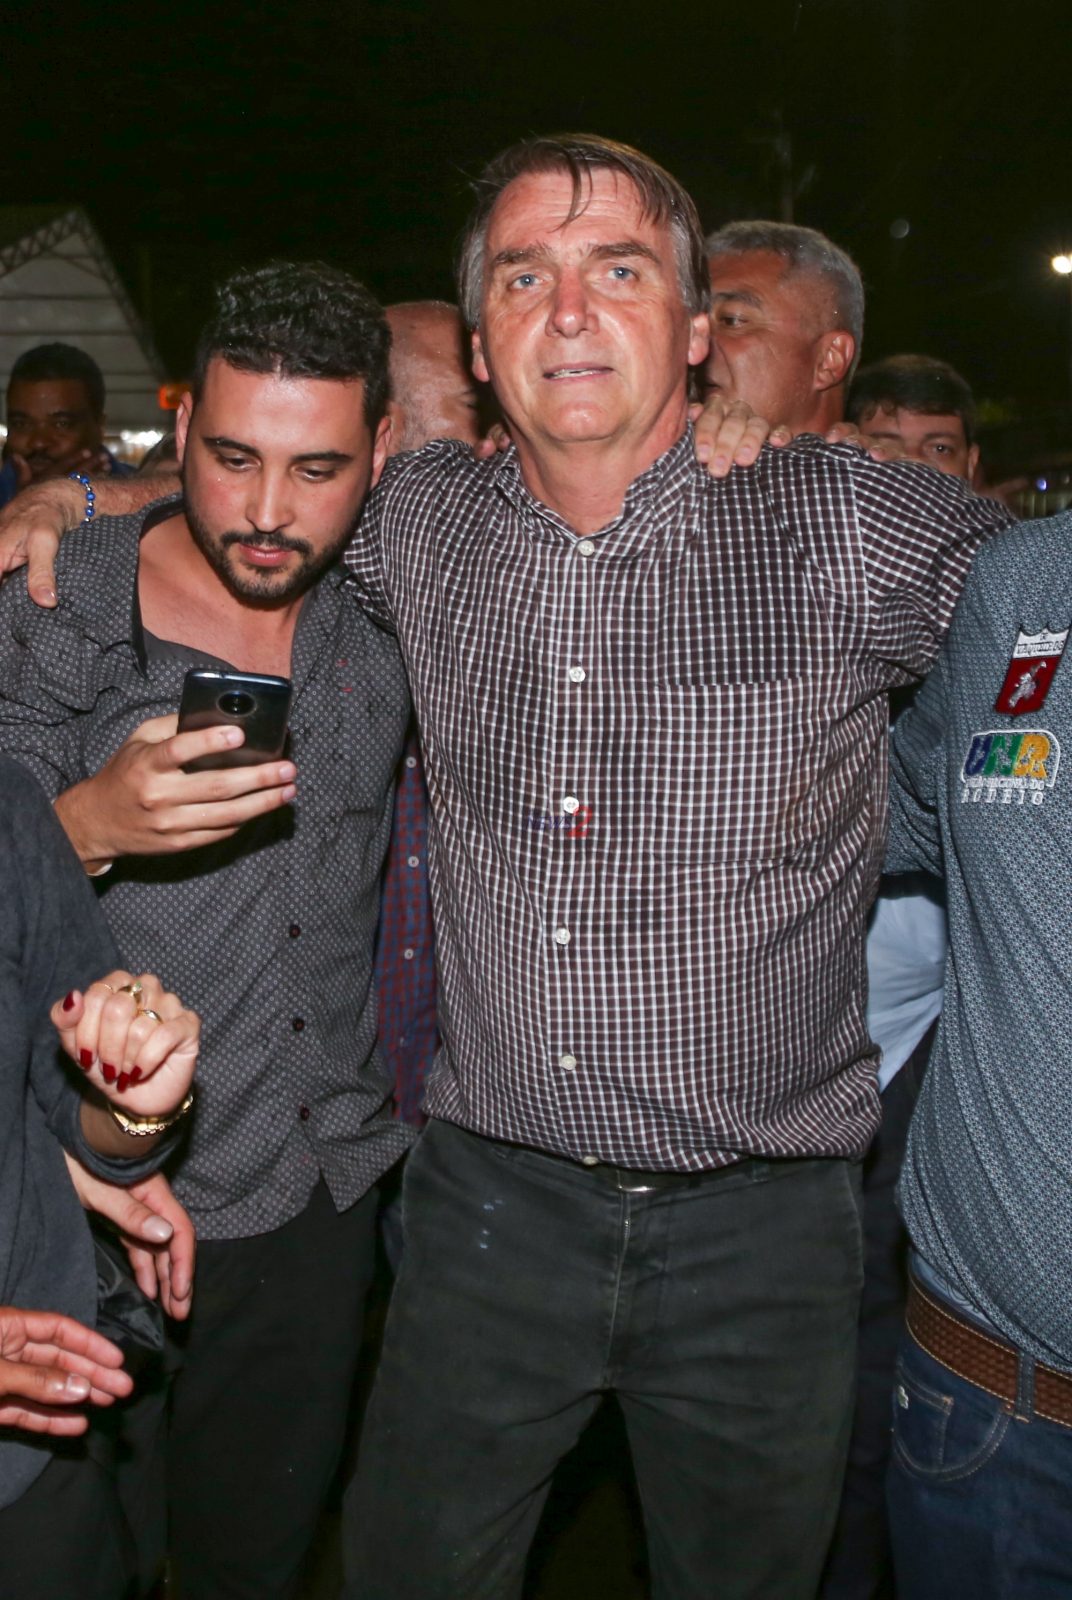 Jair Bolsonaro -One Of The Brazilian Presidential Candidate,Stabbed